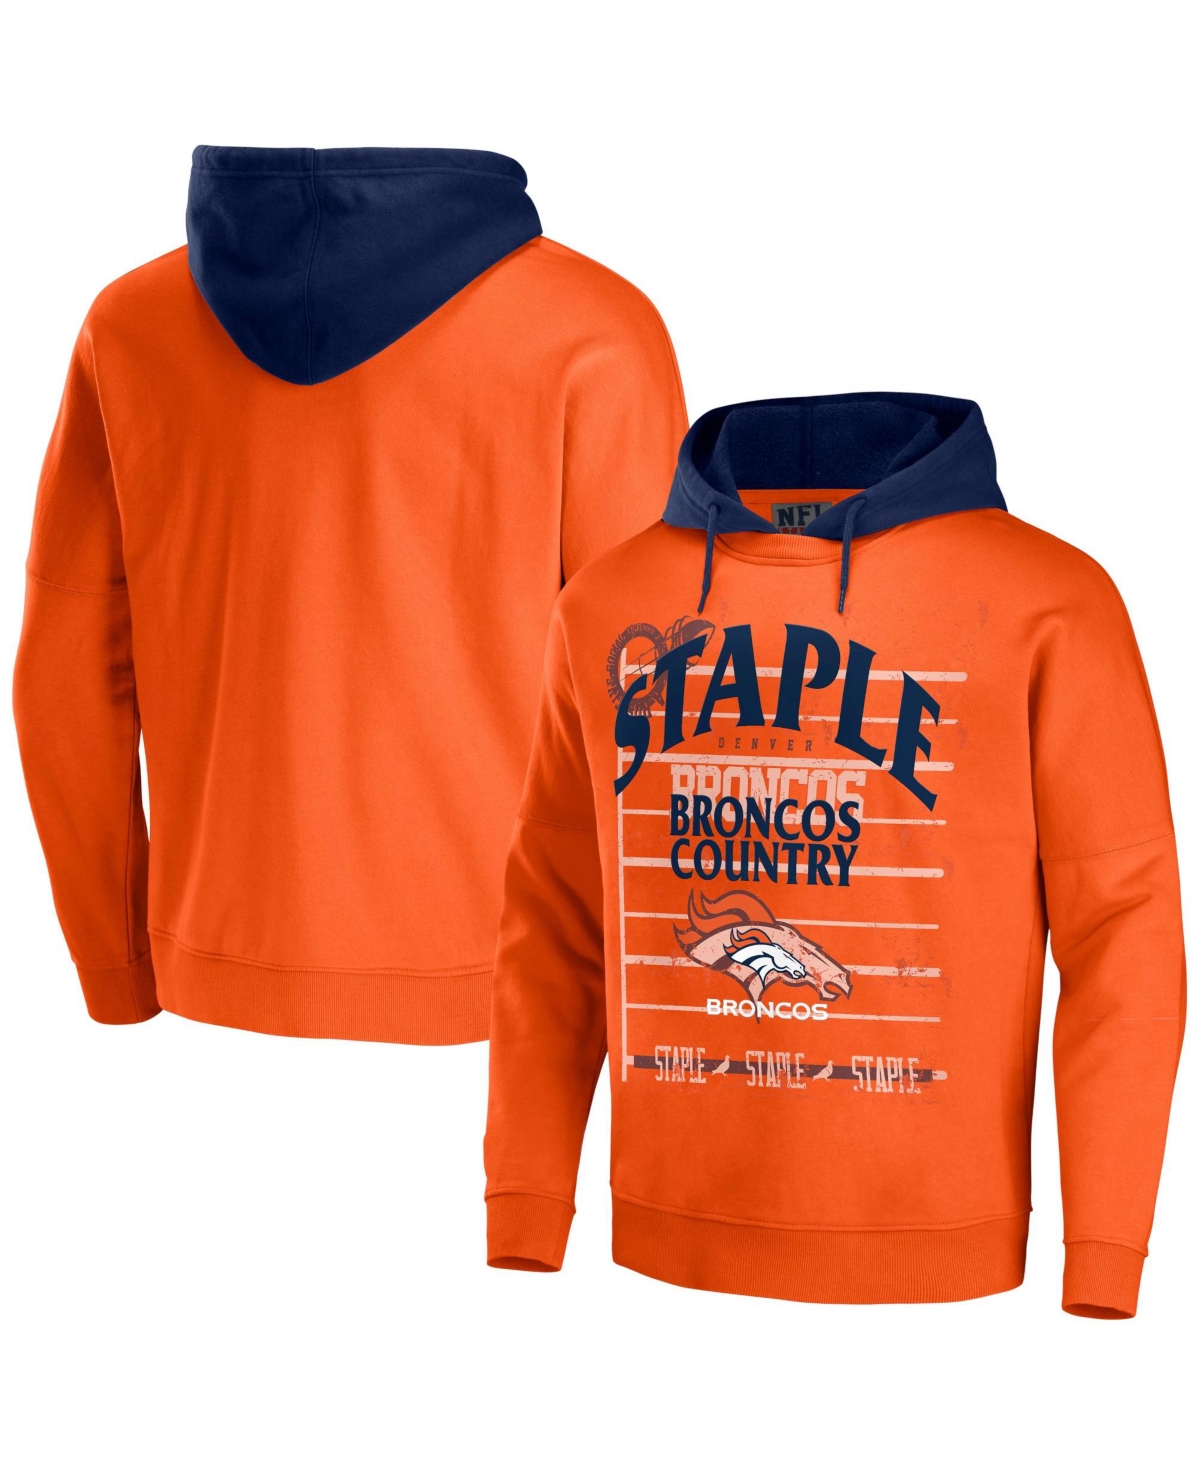 Nfl Properties Men's Nfl X Staple Orange Denver Broncos Oversized Gridiron Vintage-like Wash Pullover Hoodie